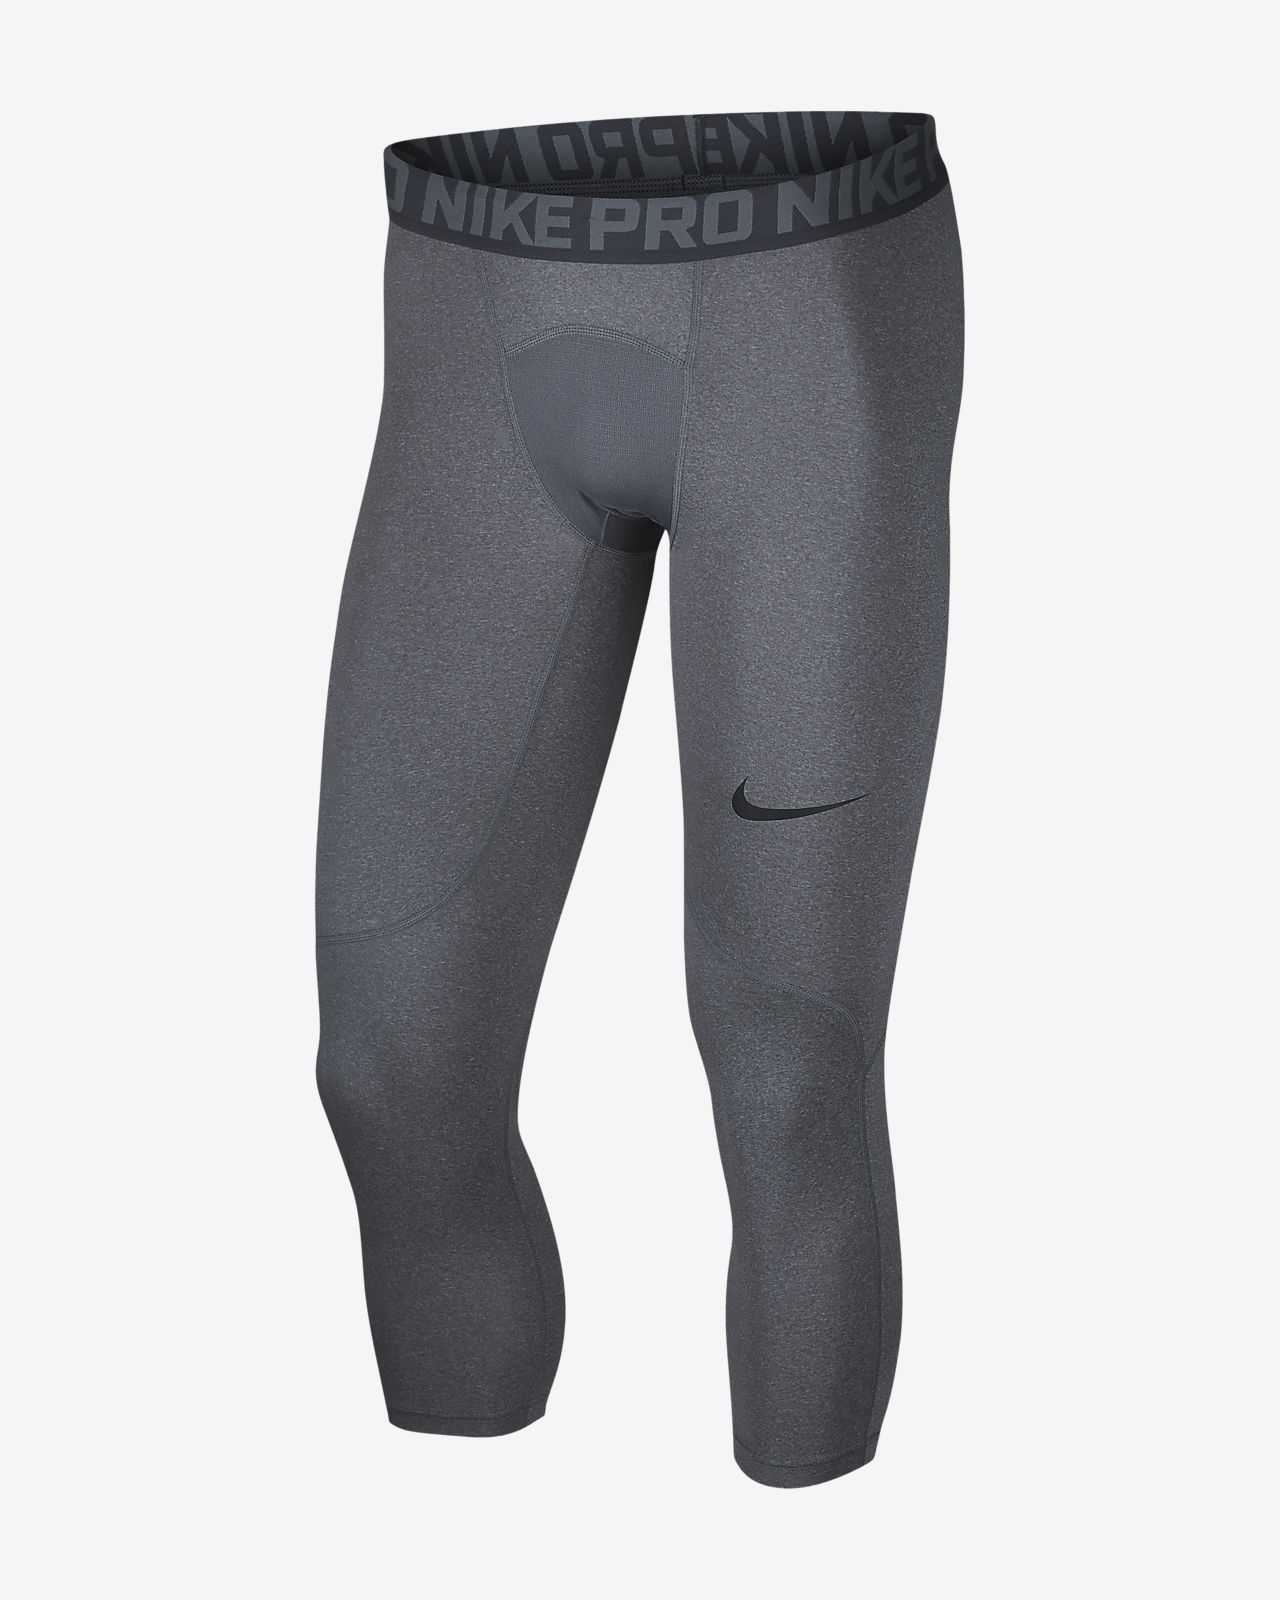 New DRI-FIT Mens Sport Full Long Pants Compression Wear Running Training Tights